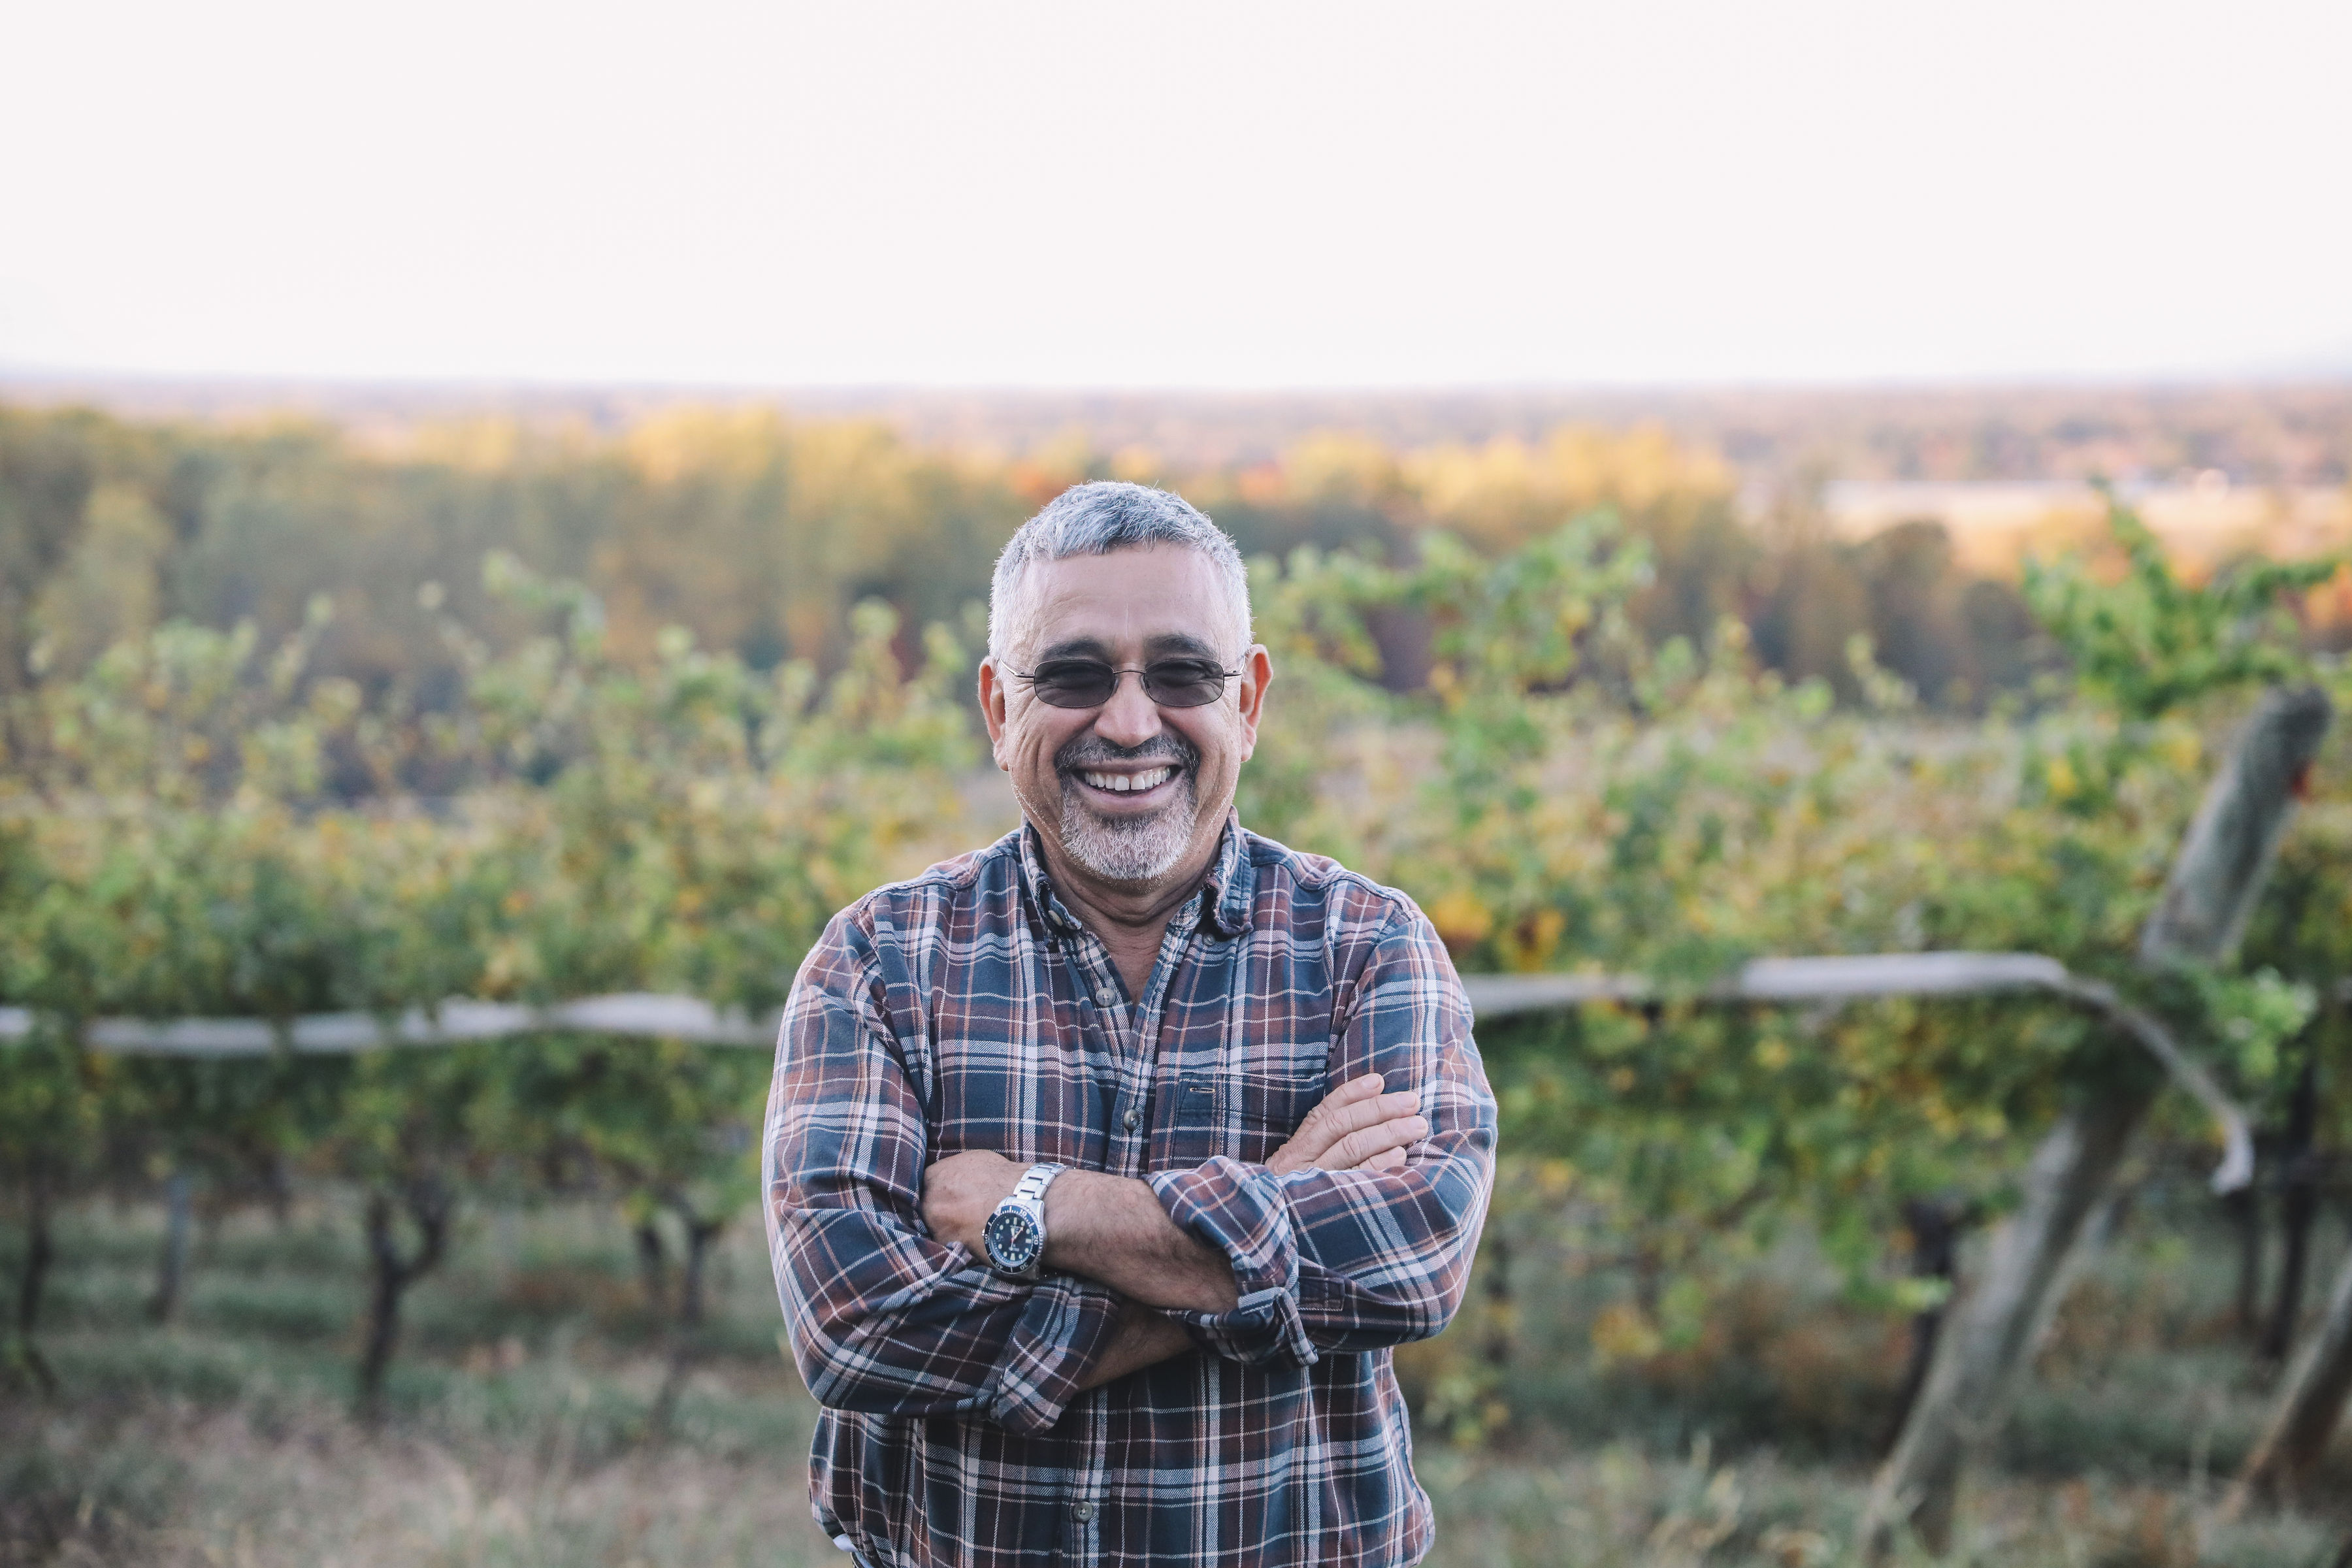 Fernando, the Viticulturist at the winery near Charlottesville Virginia